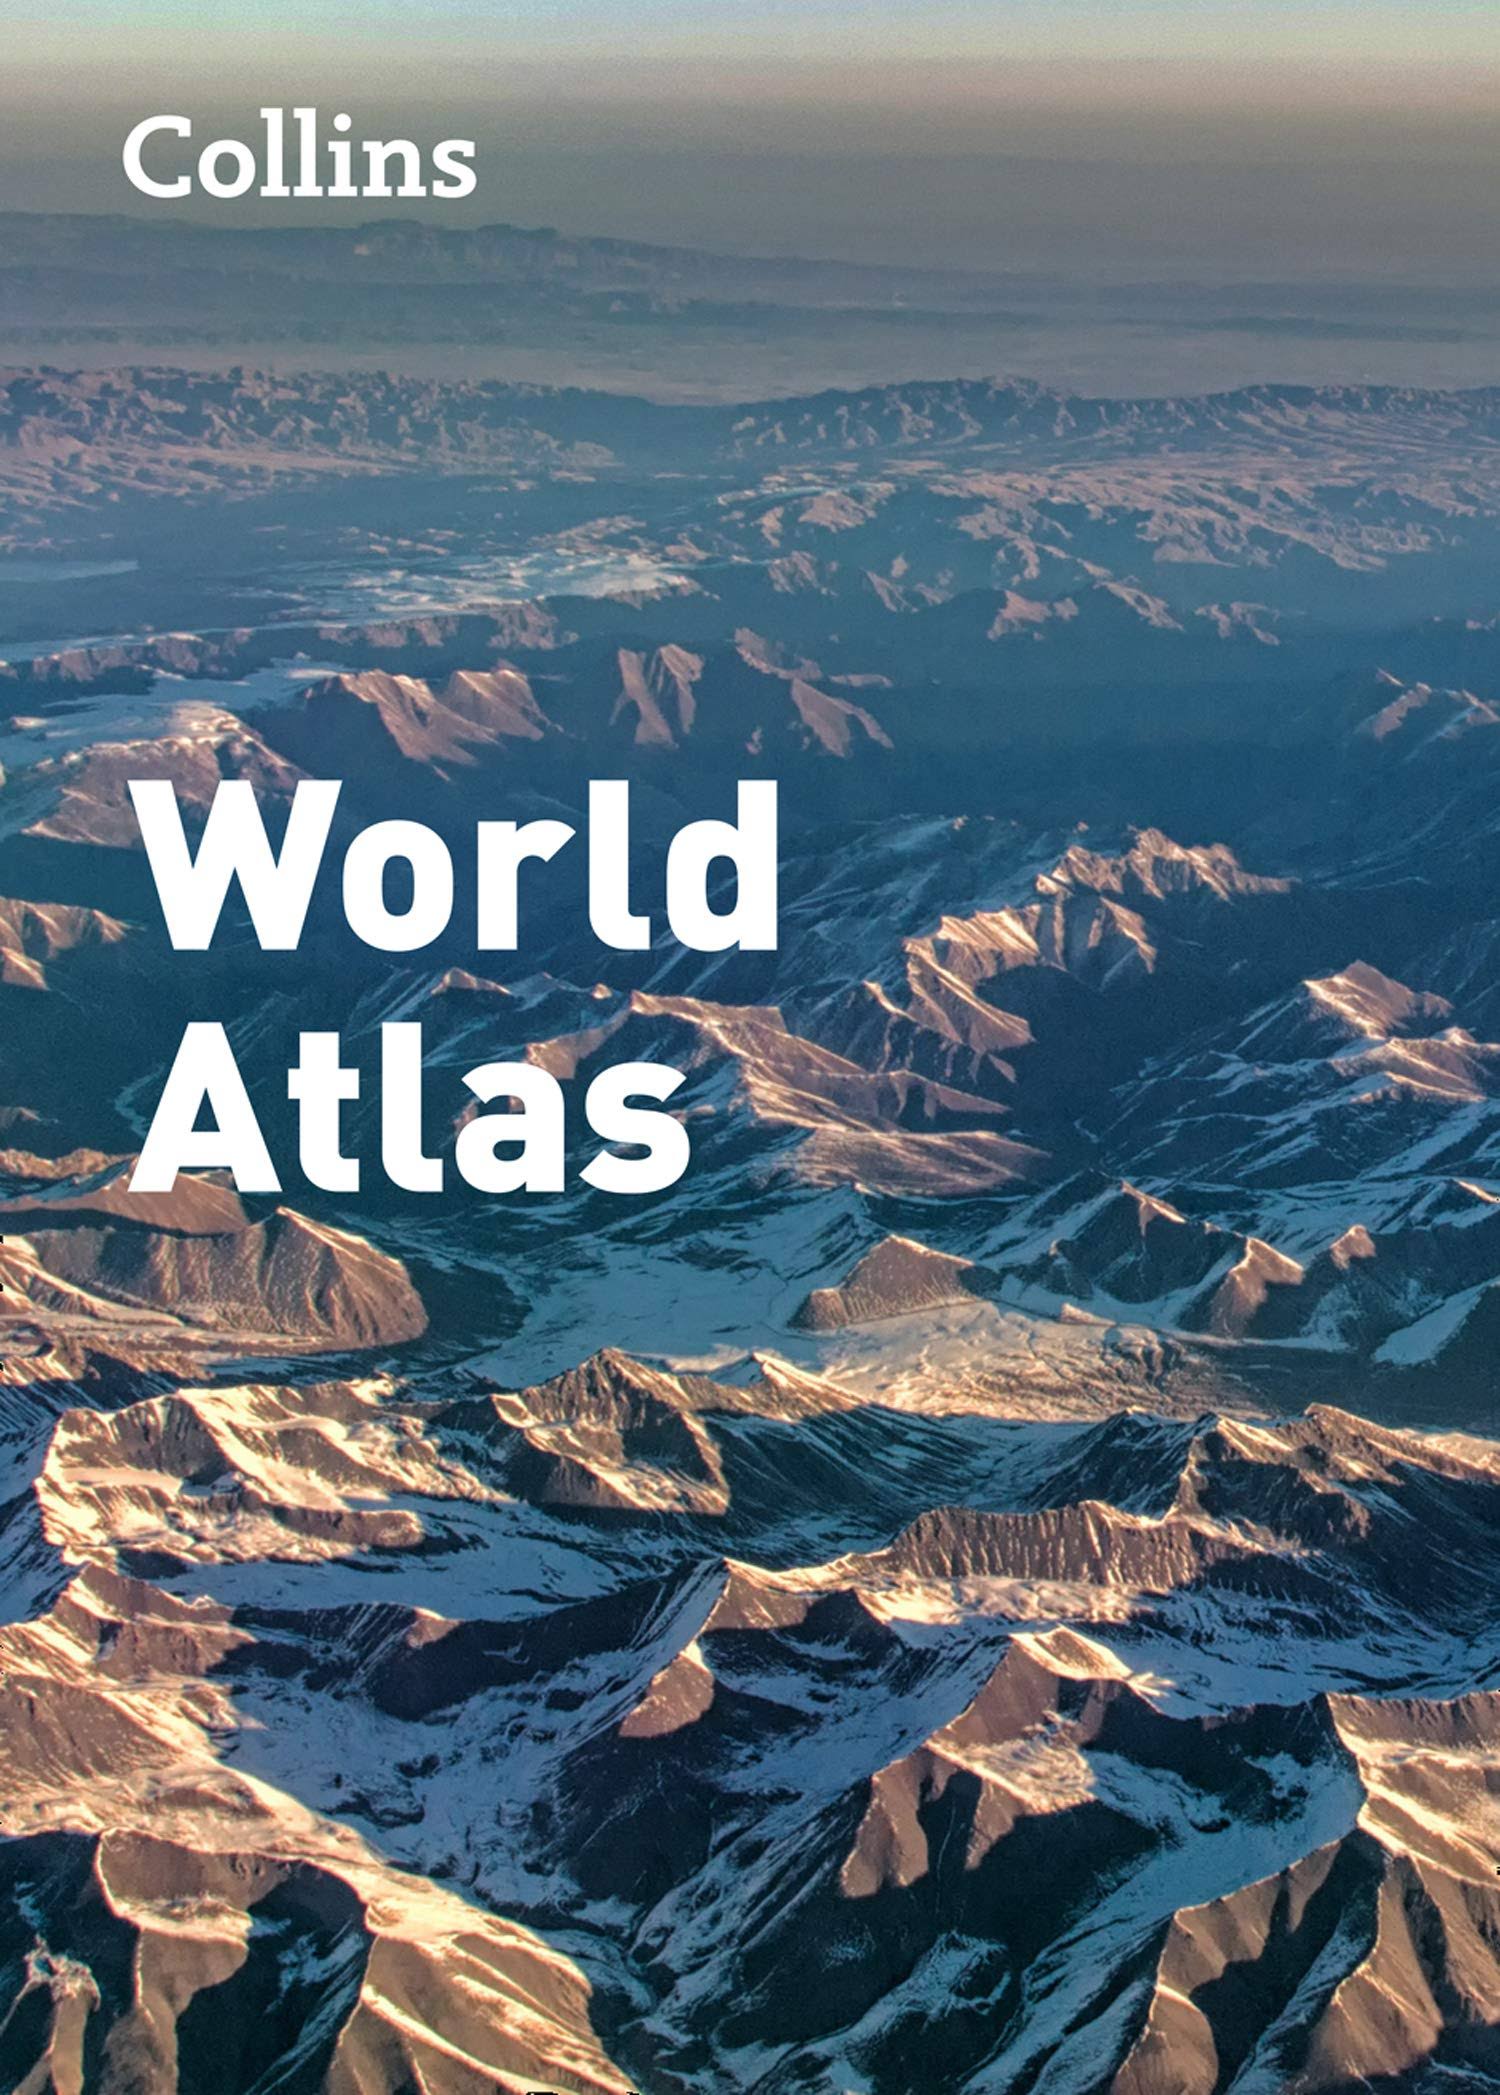 Collins World Atlas: Paperback Edition [13th Edition] [Book]